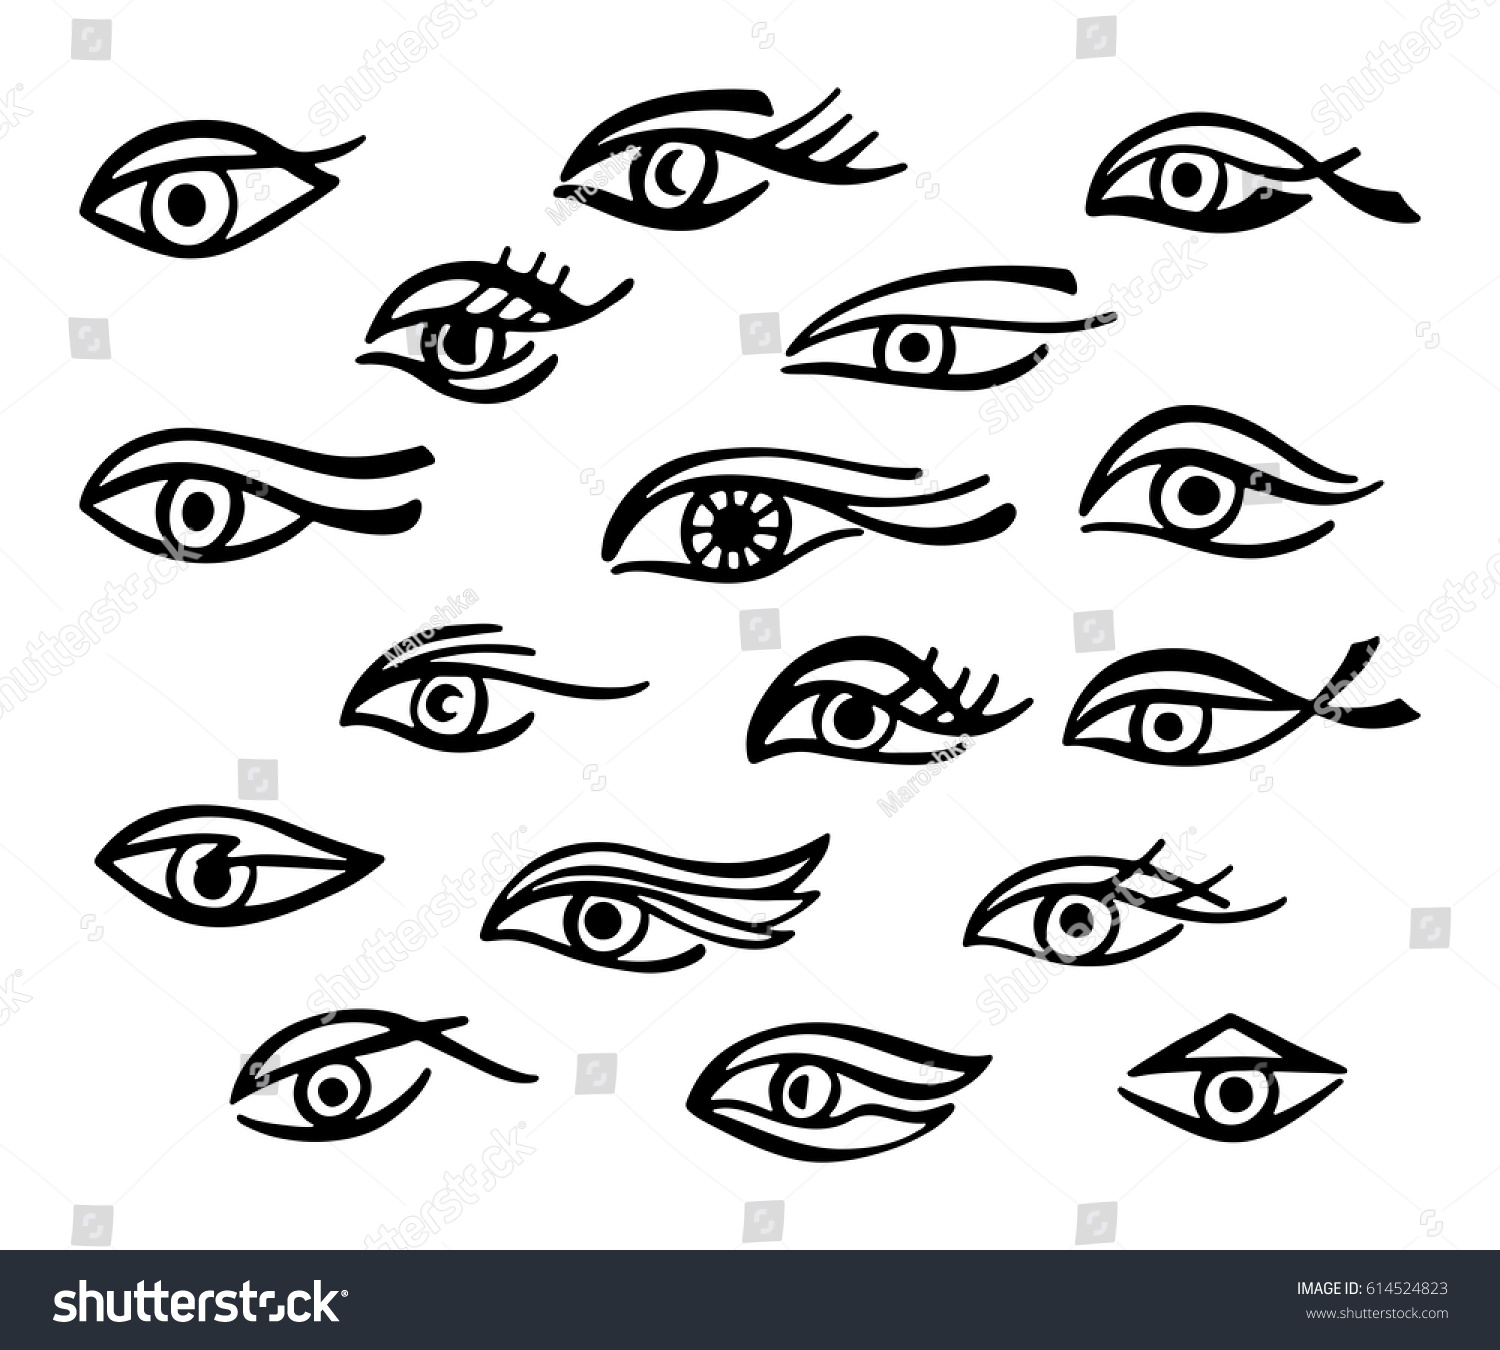 Set Hand Drawn Human Eyes Monochrome Stock Vector 614524823 - Shutterstock